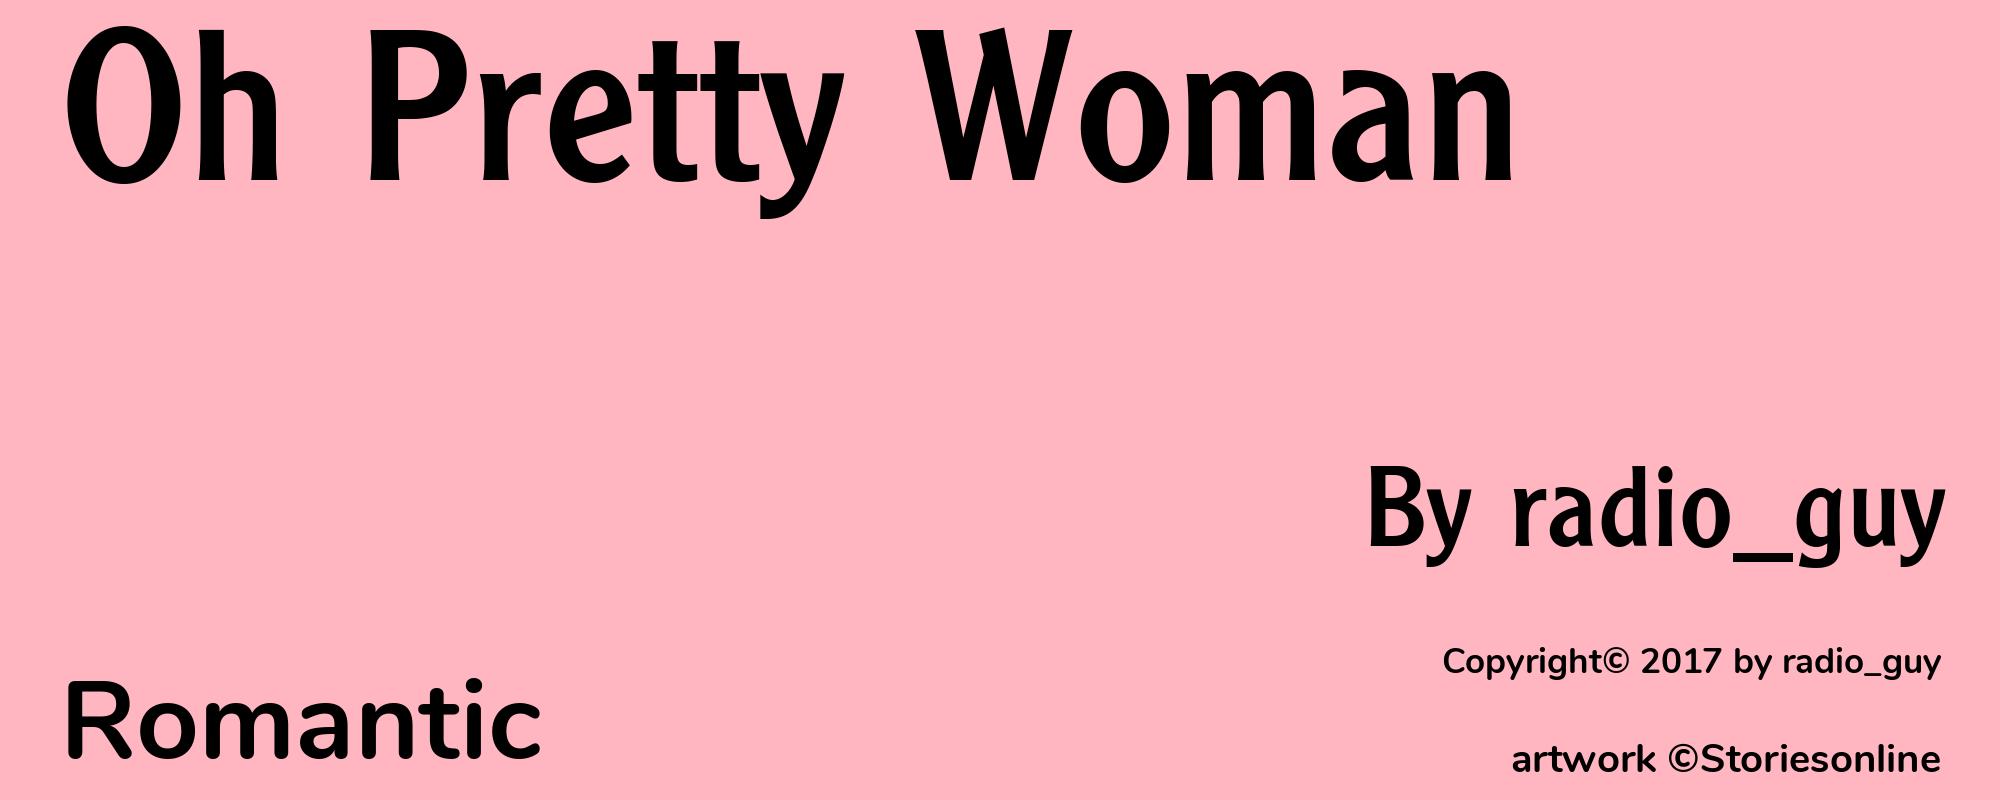 Oh Pretty Woman - Cover